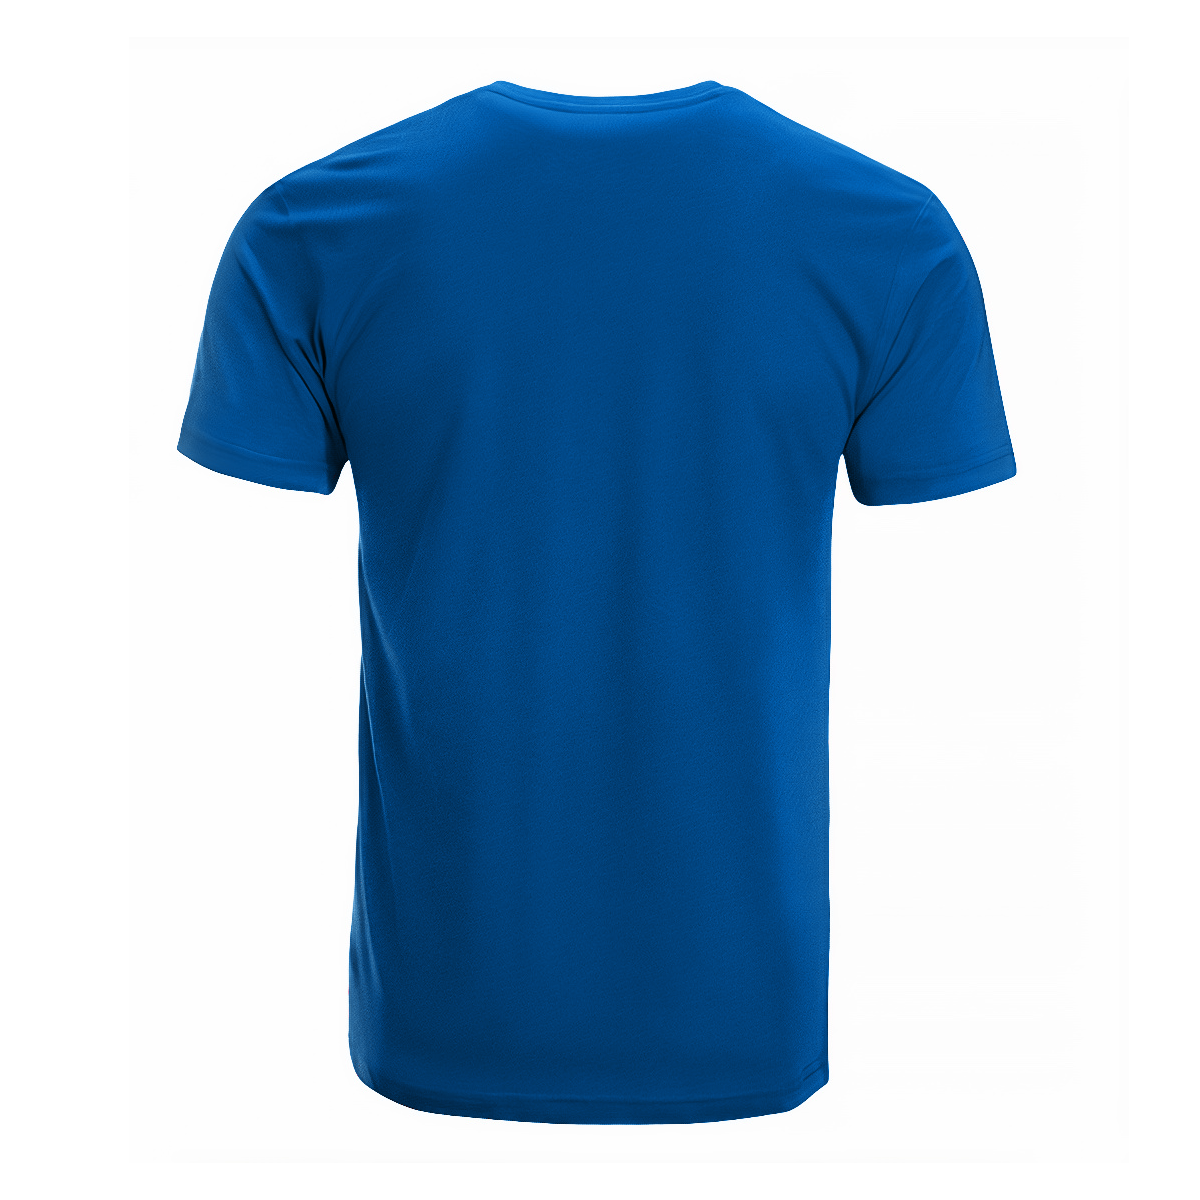 Horsburgh Tartan Crest T-shirt - I'm not yelling style